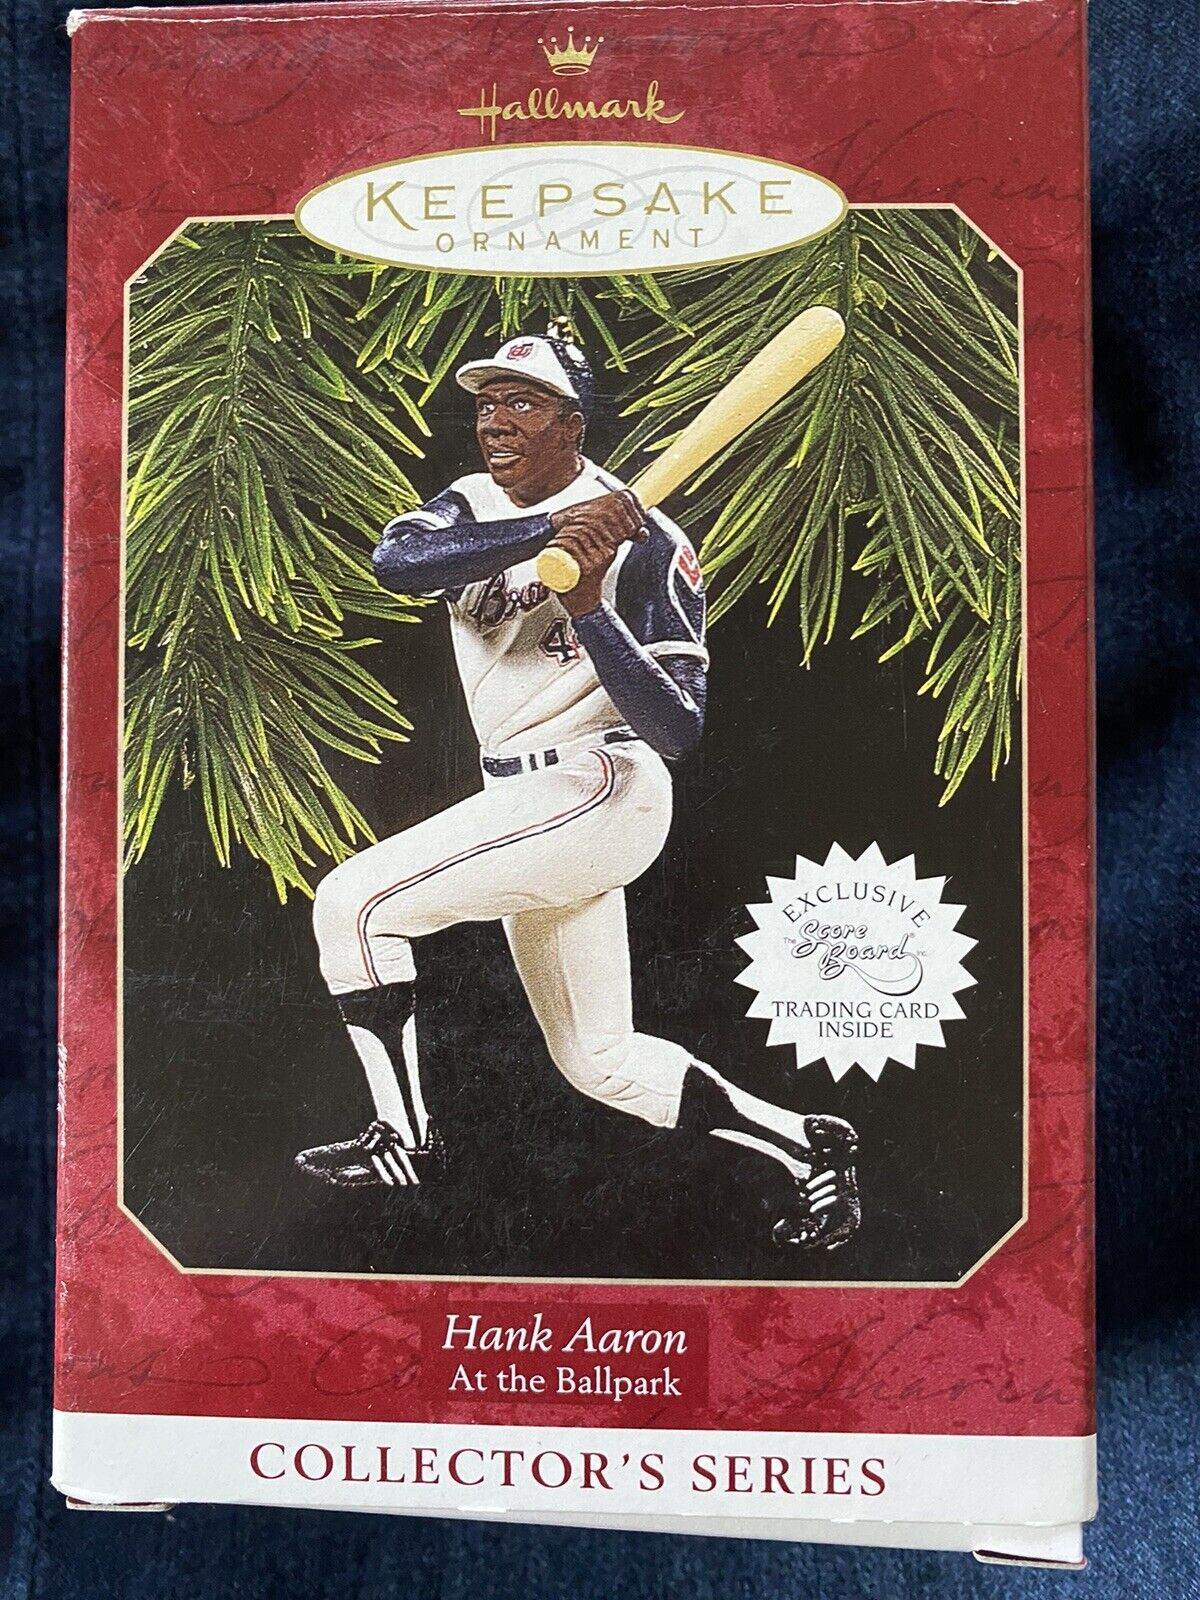 MLB Hank Aaron’s hallmark keepsake ornaments sports